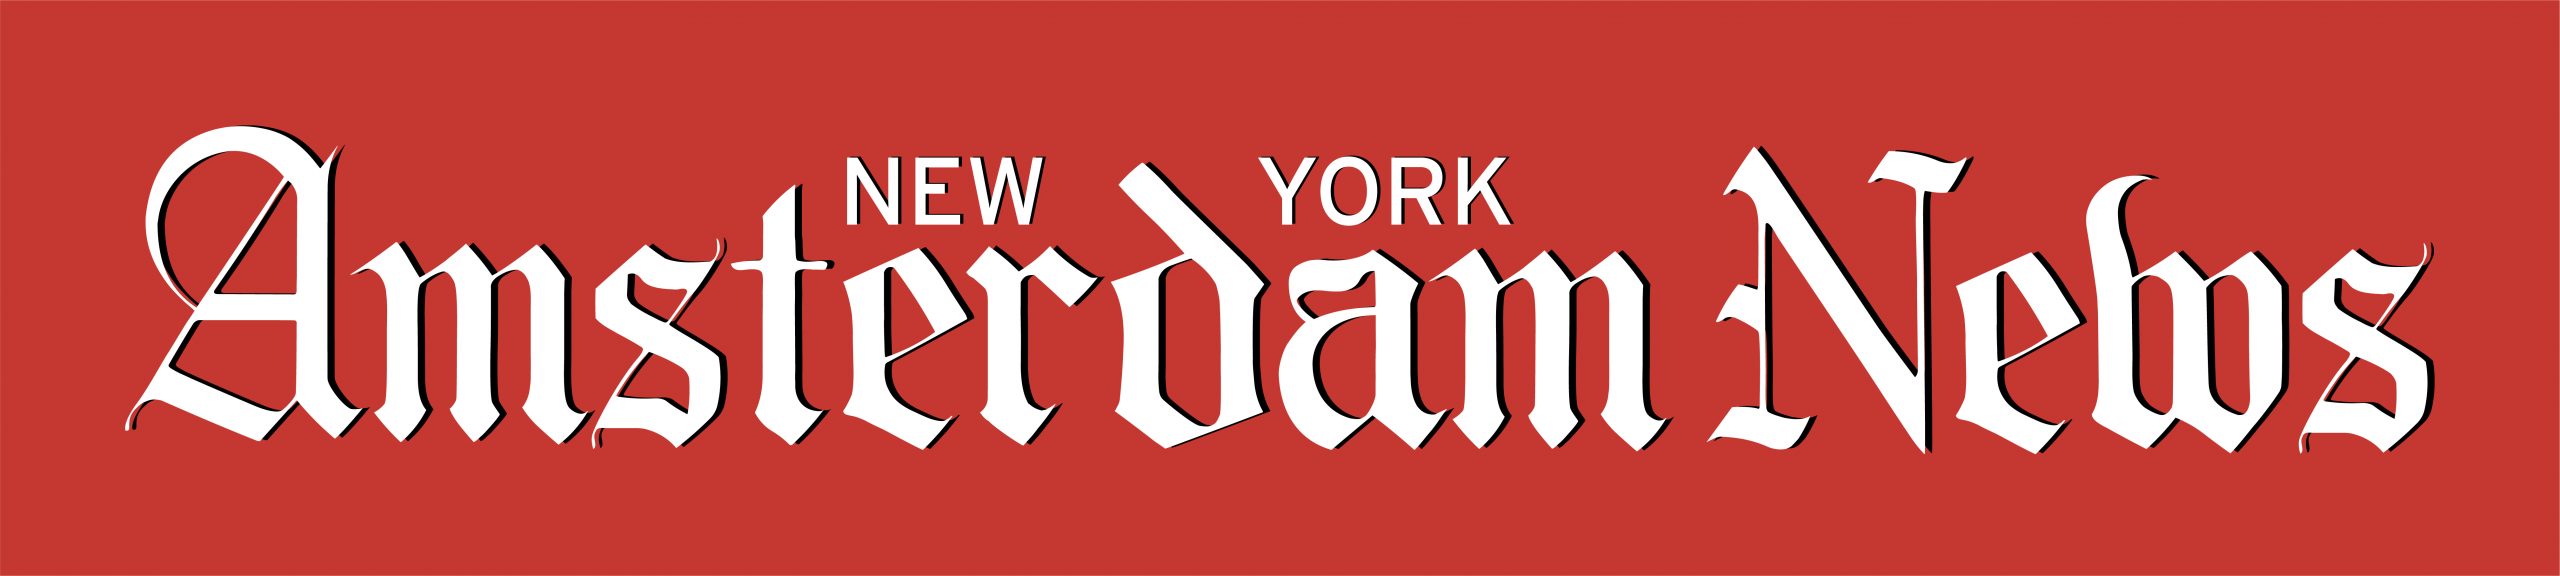 New York Amsterdam News